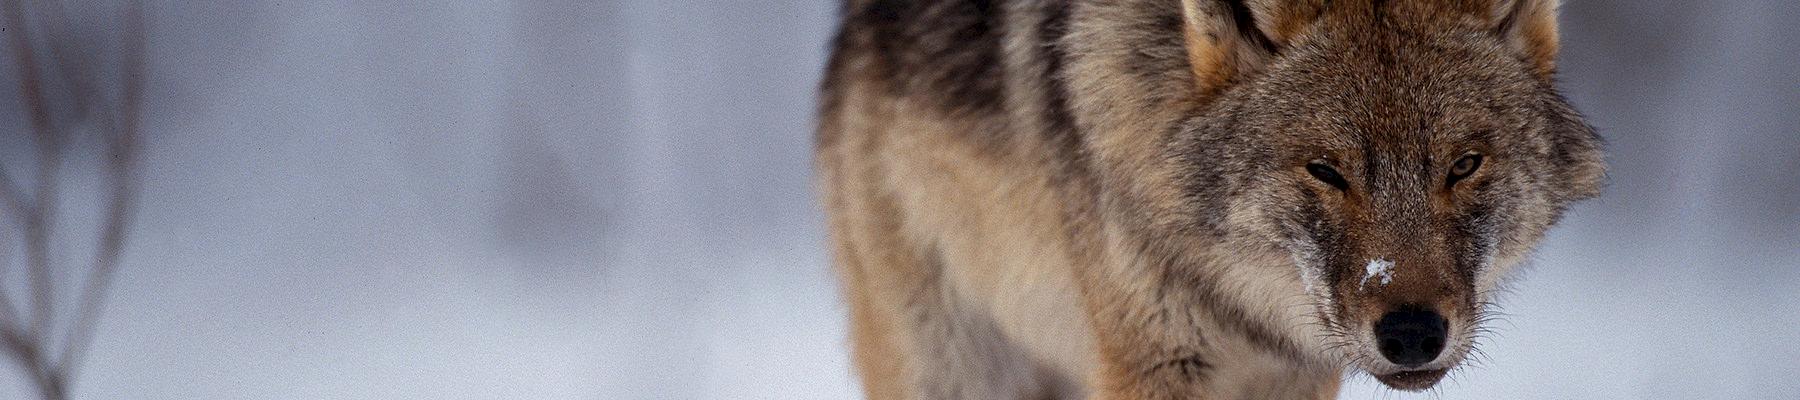 Wolf Canis lupus © Staffan Widstrand / WWF